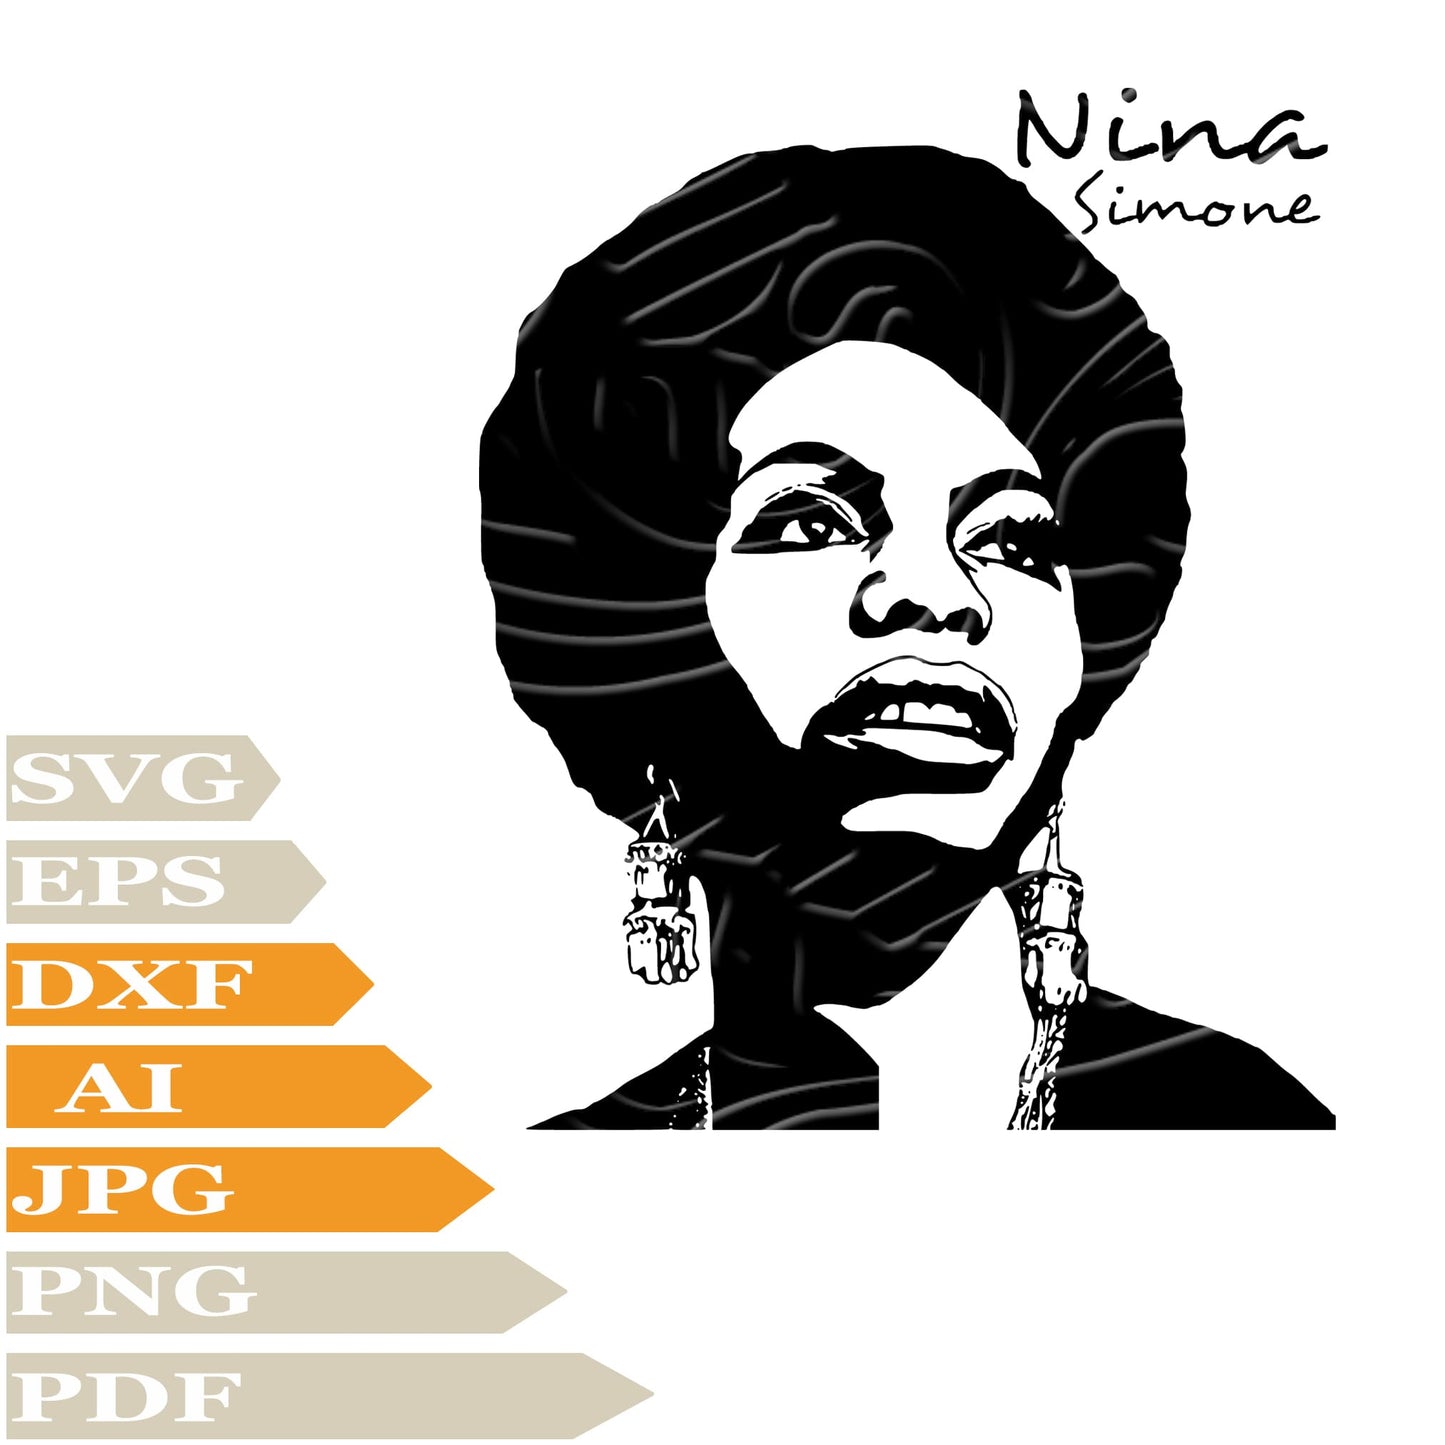 Nina Simone SVG-Nina Simone Personalized SVG-Nina Simone Drawing SVG-Nina Simone Vector Illustration-PNG-Decal-Cricut-Digital Files-Clip Art-Cut File-For Shirts-Silhouette